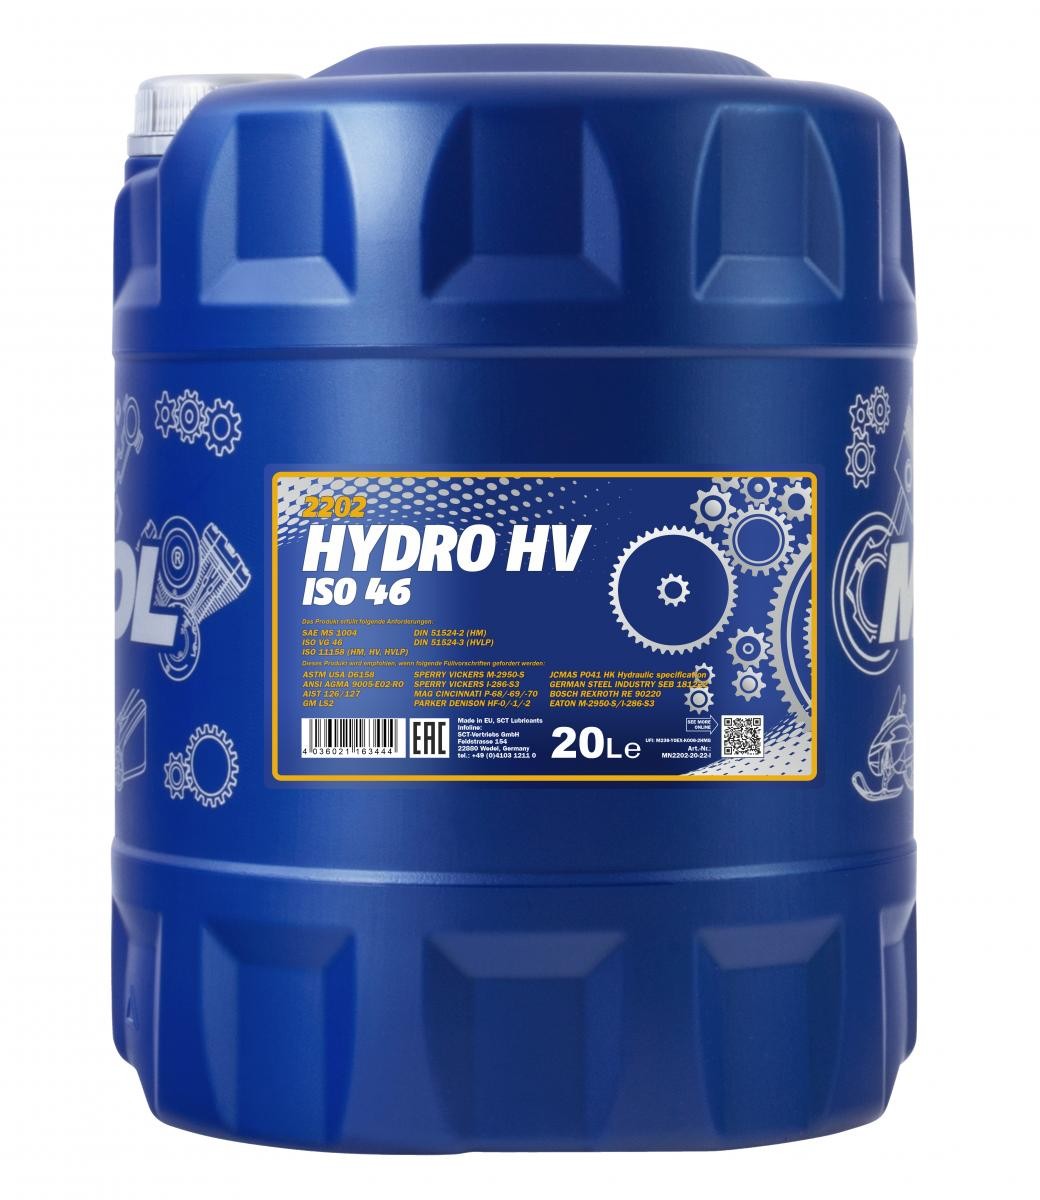 MANNOL Hydro HV ISO 46, ISO VG 46 Central Hydraulic Oil MN2202-20 buy